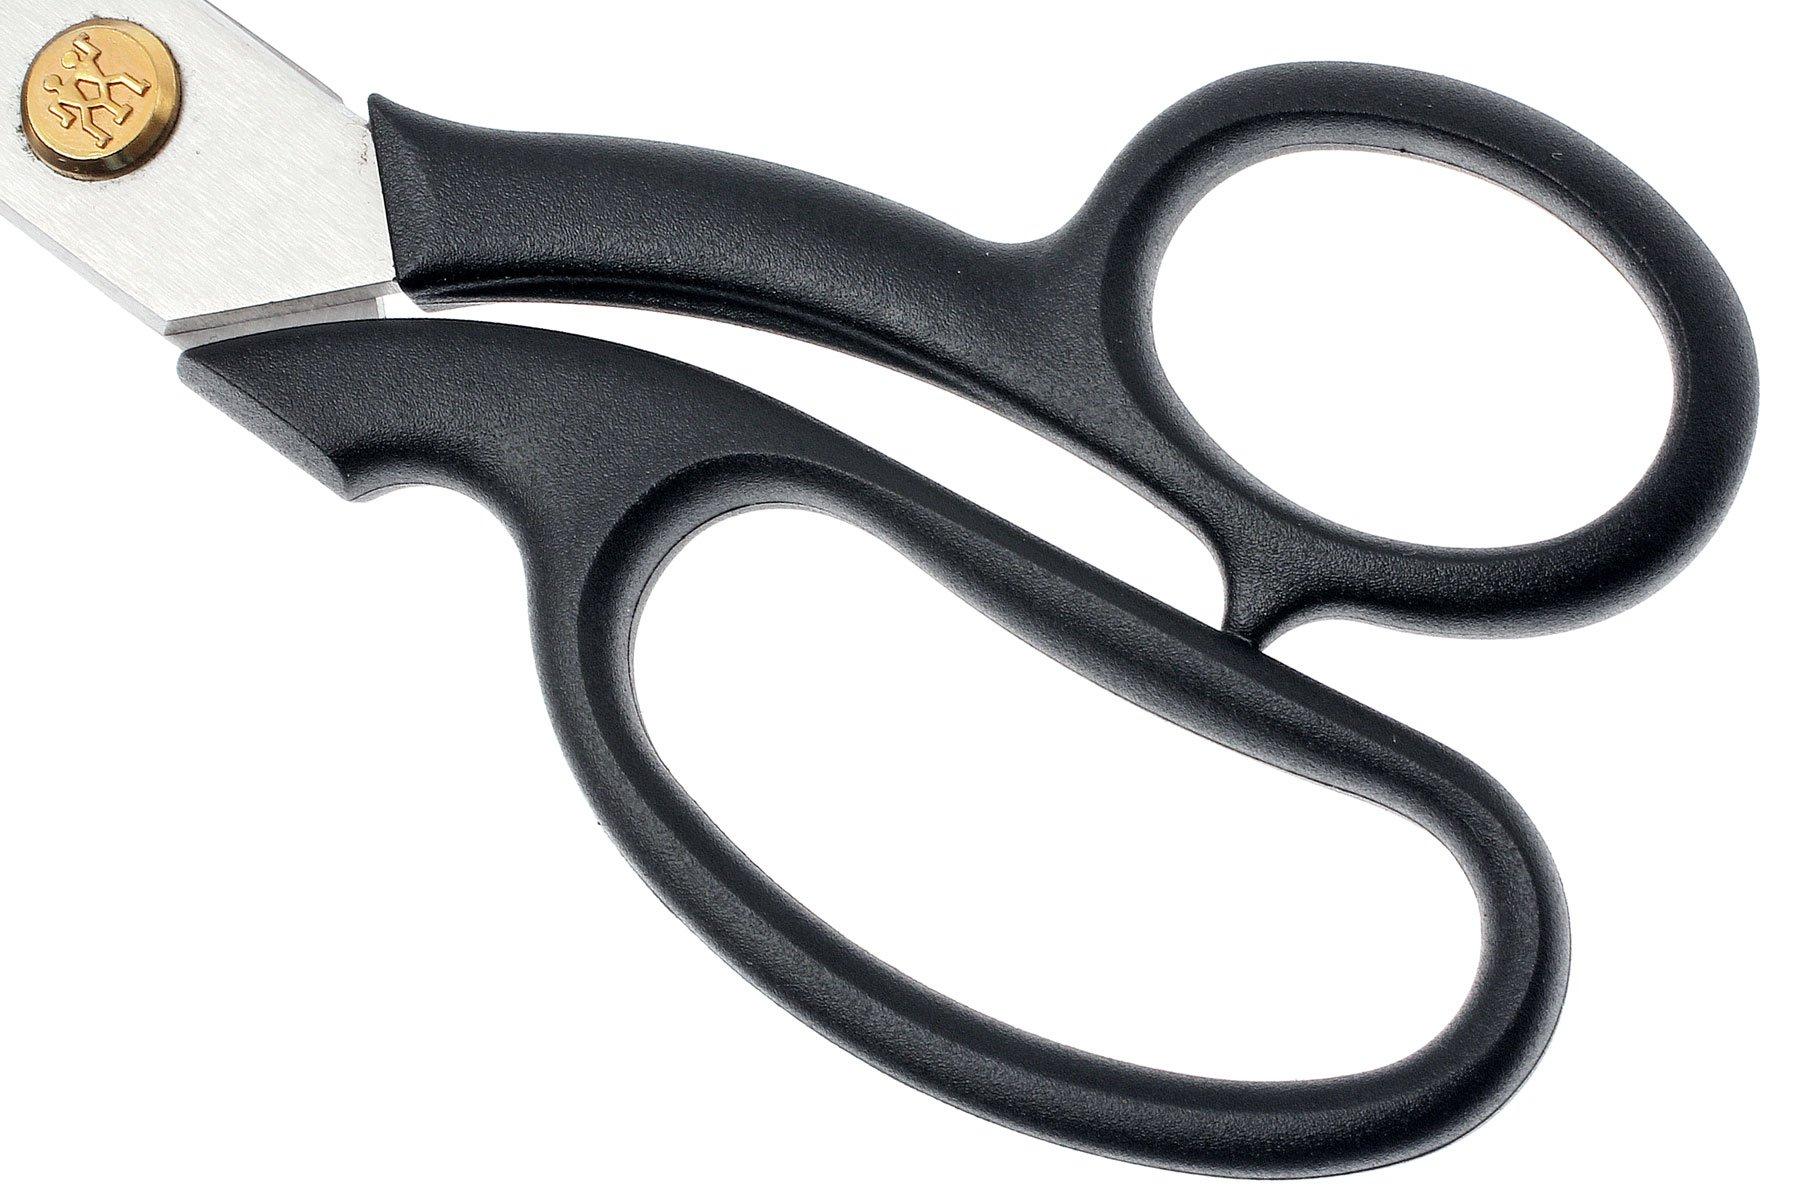 Victorinox Bent Household Scissors Black